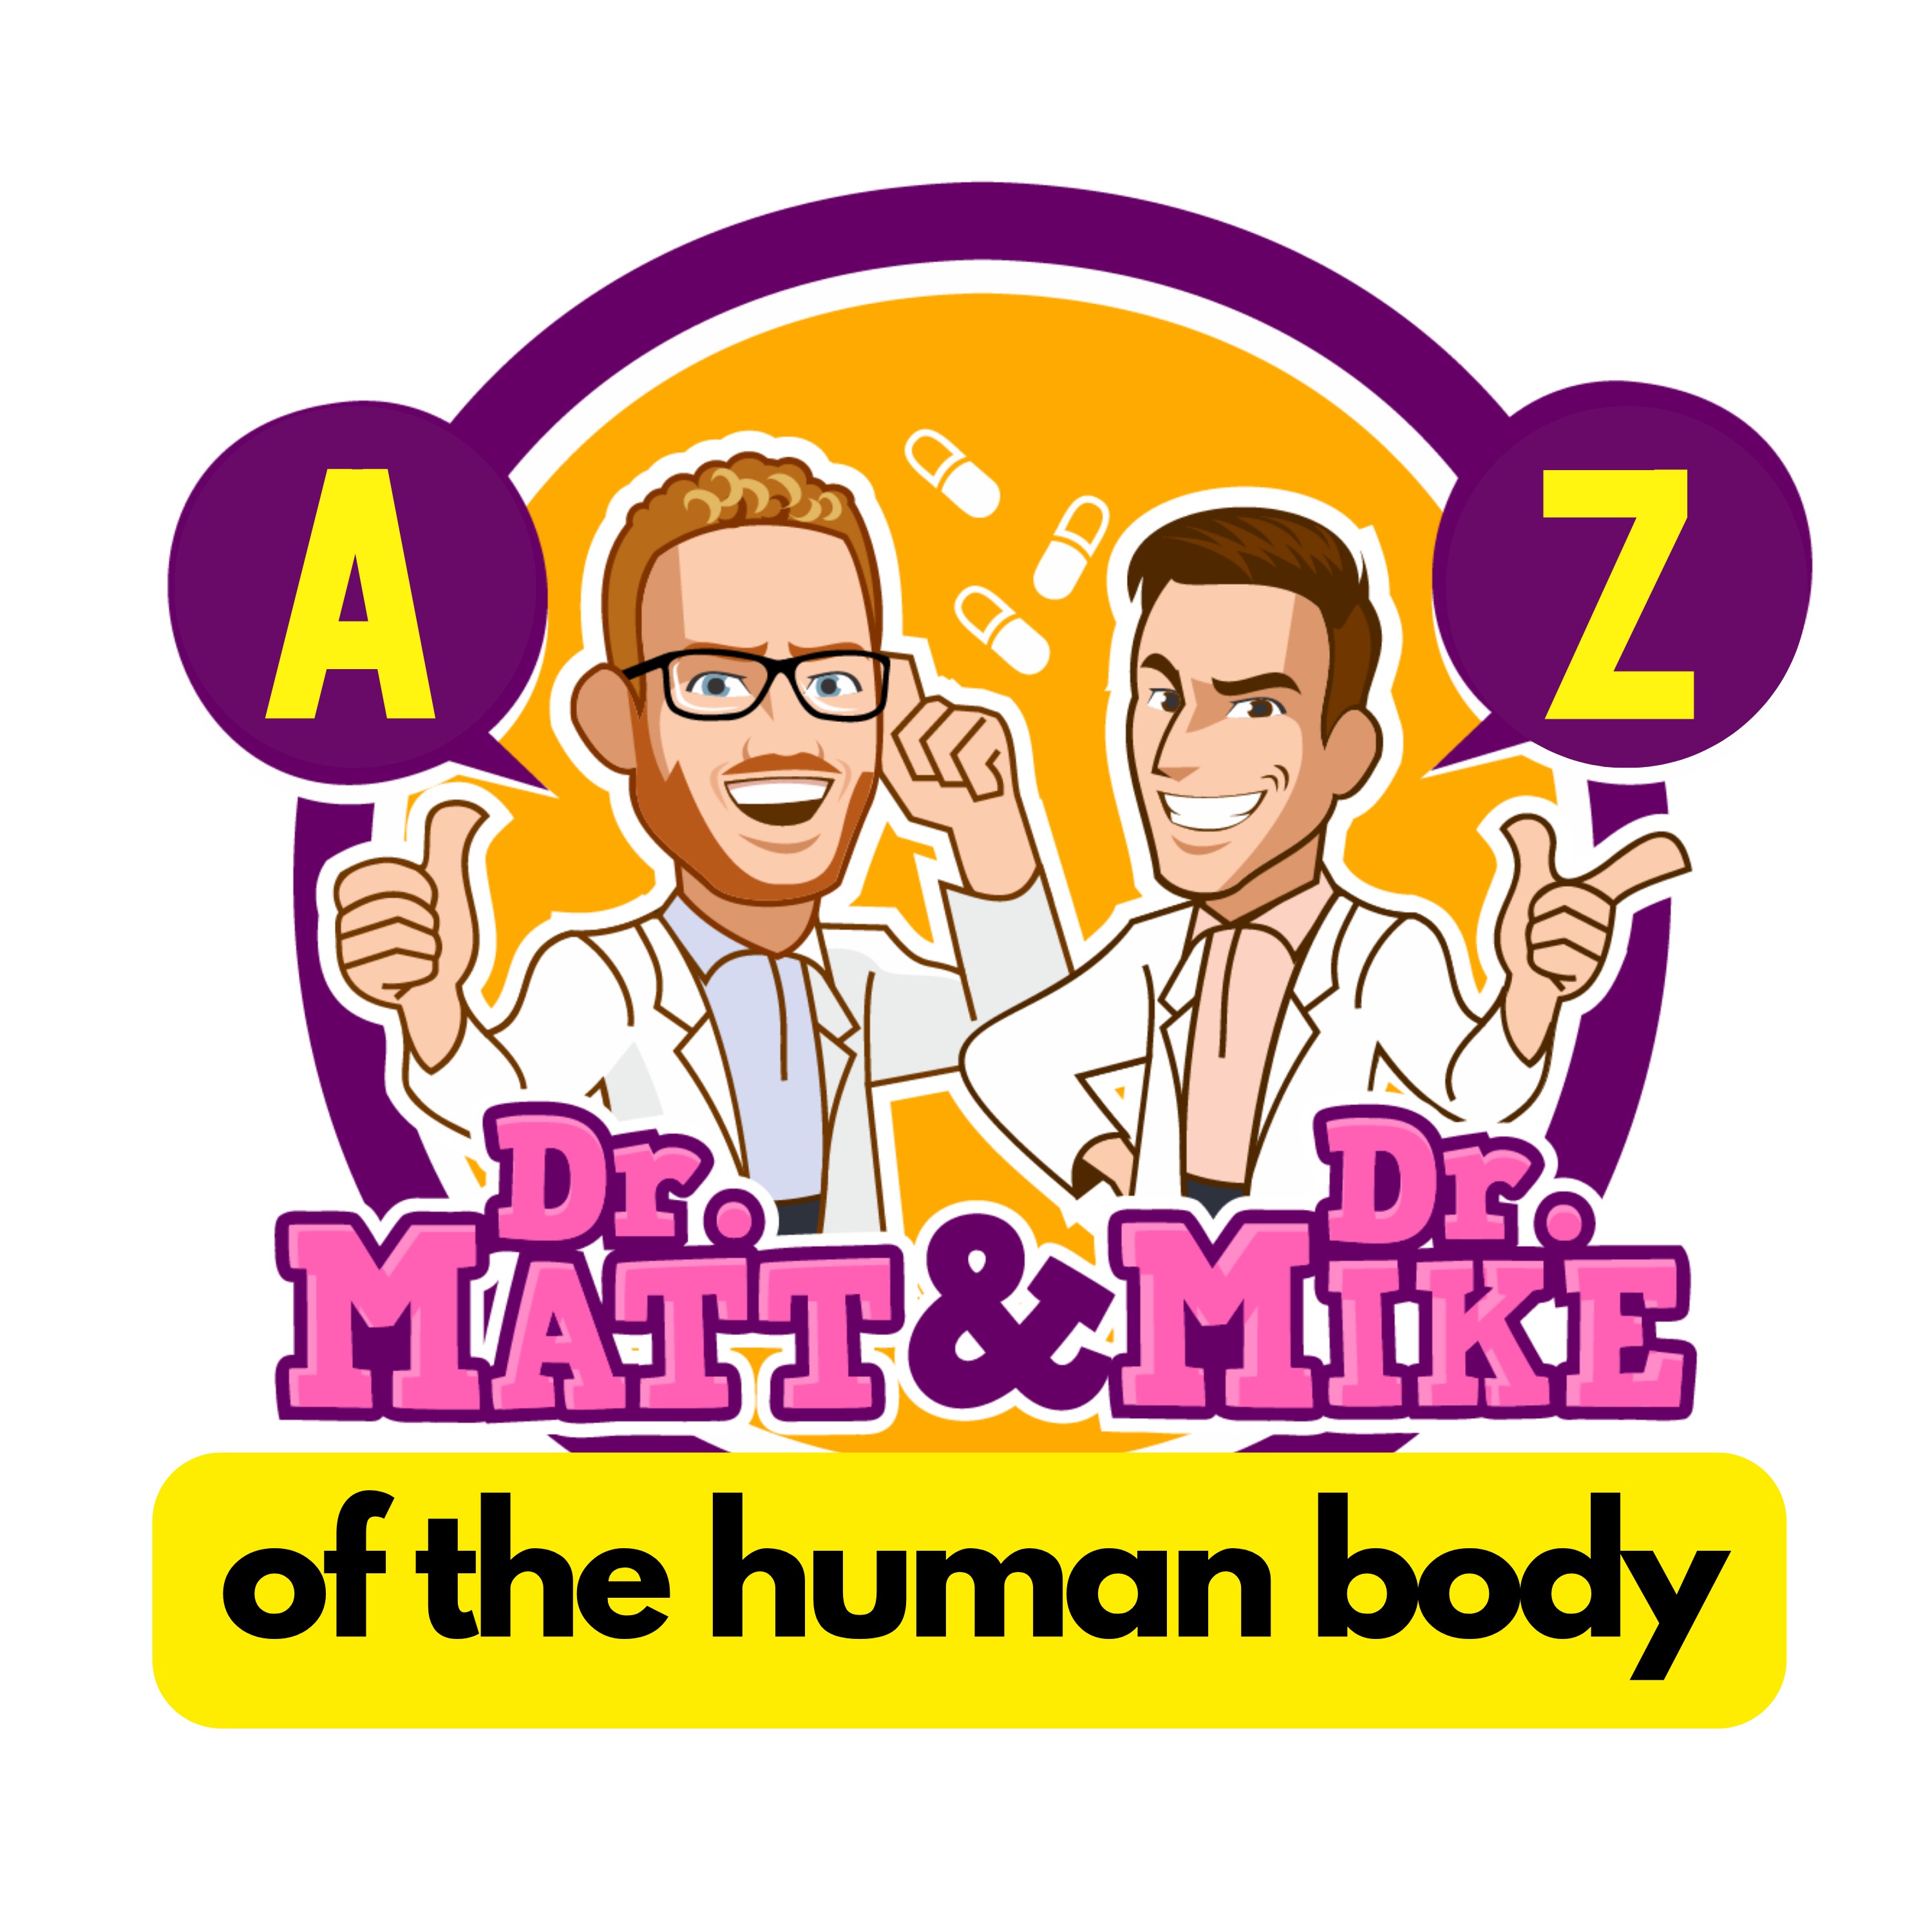 Abdominopelvic Quadrants/Regions | A-Z of the Human Body